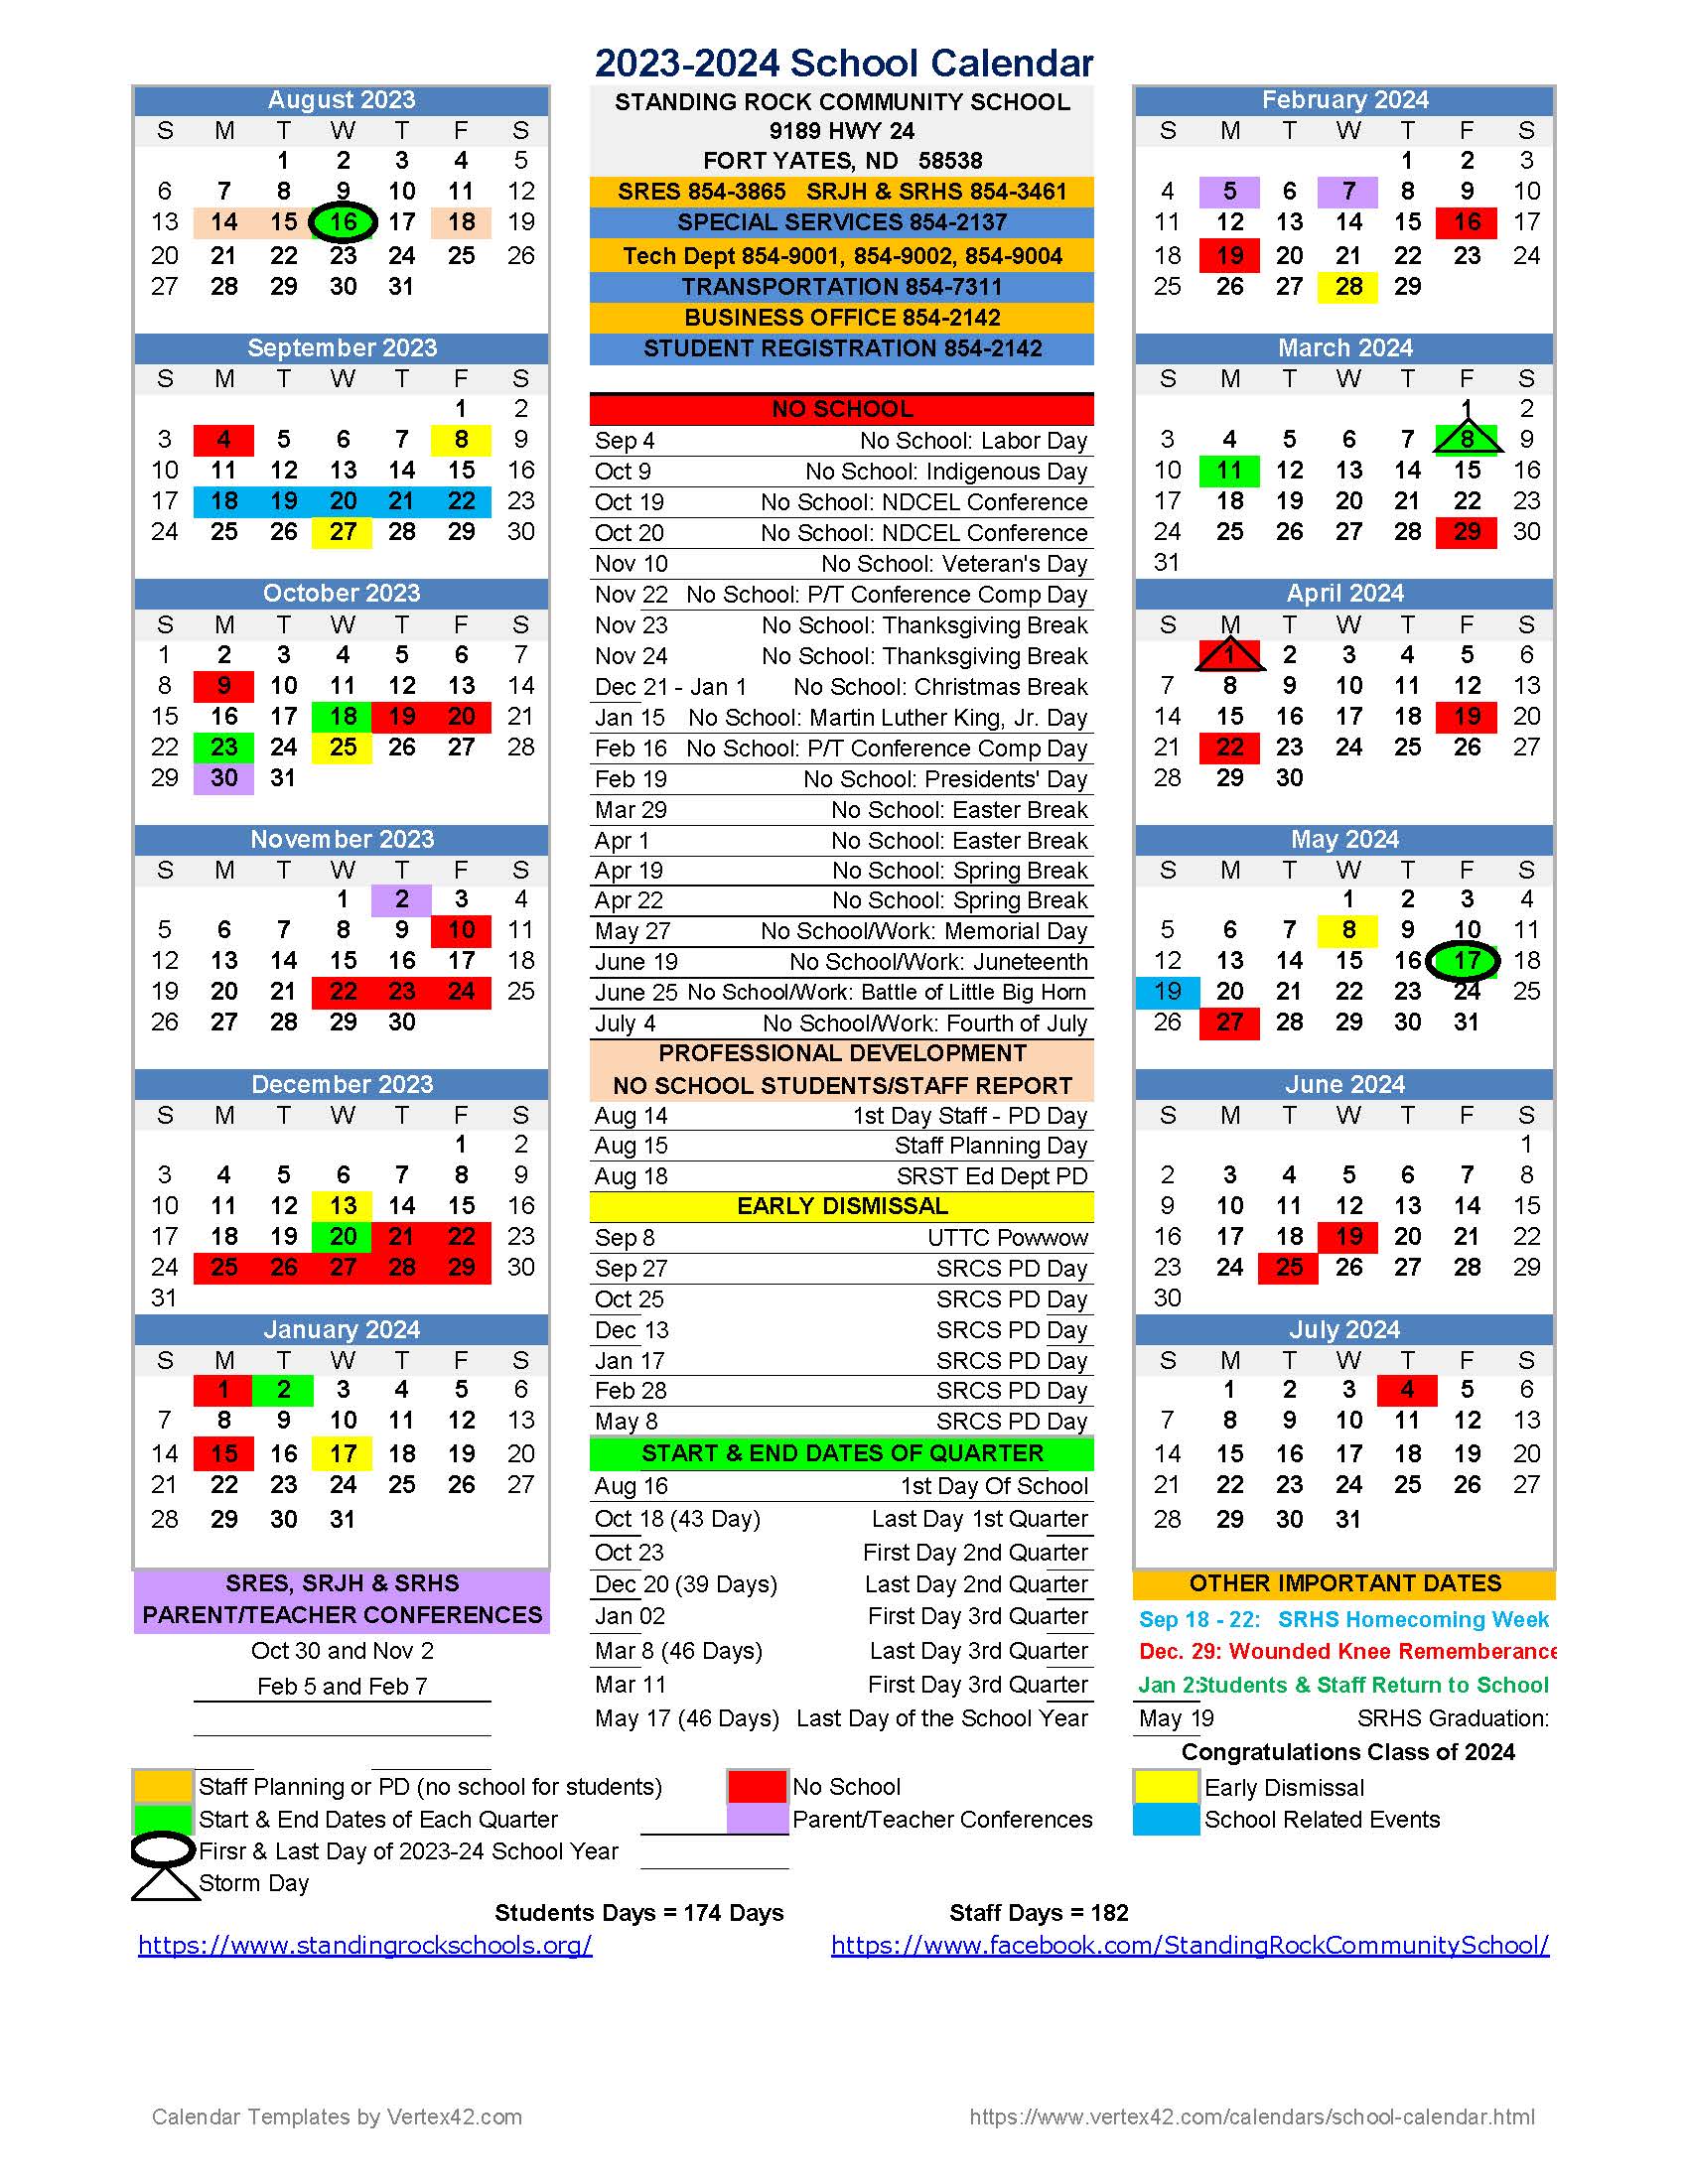 District Calendar 23-24